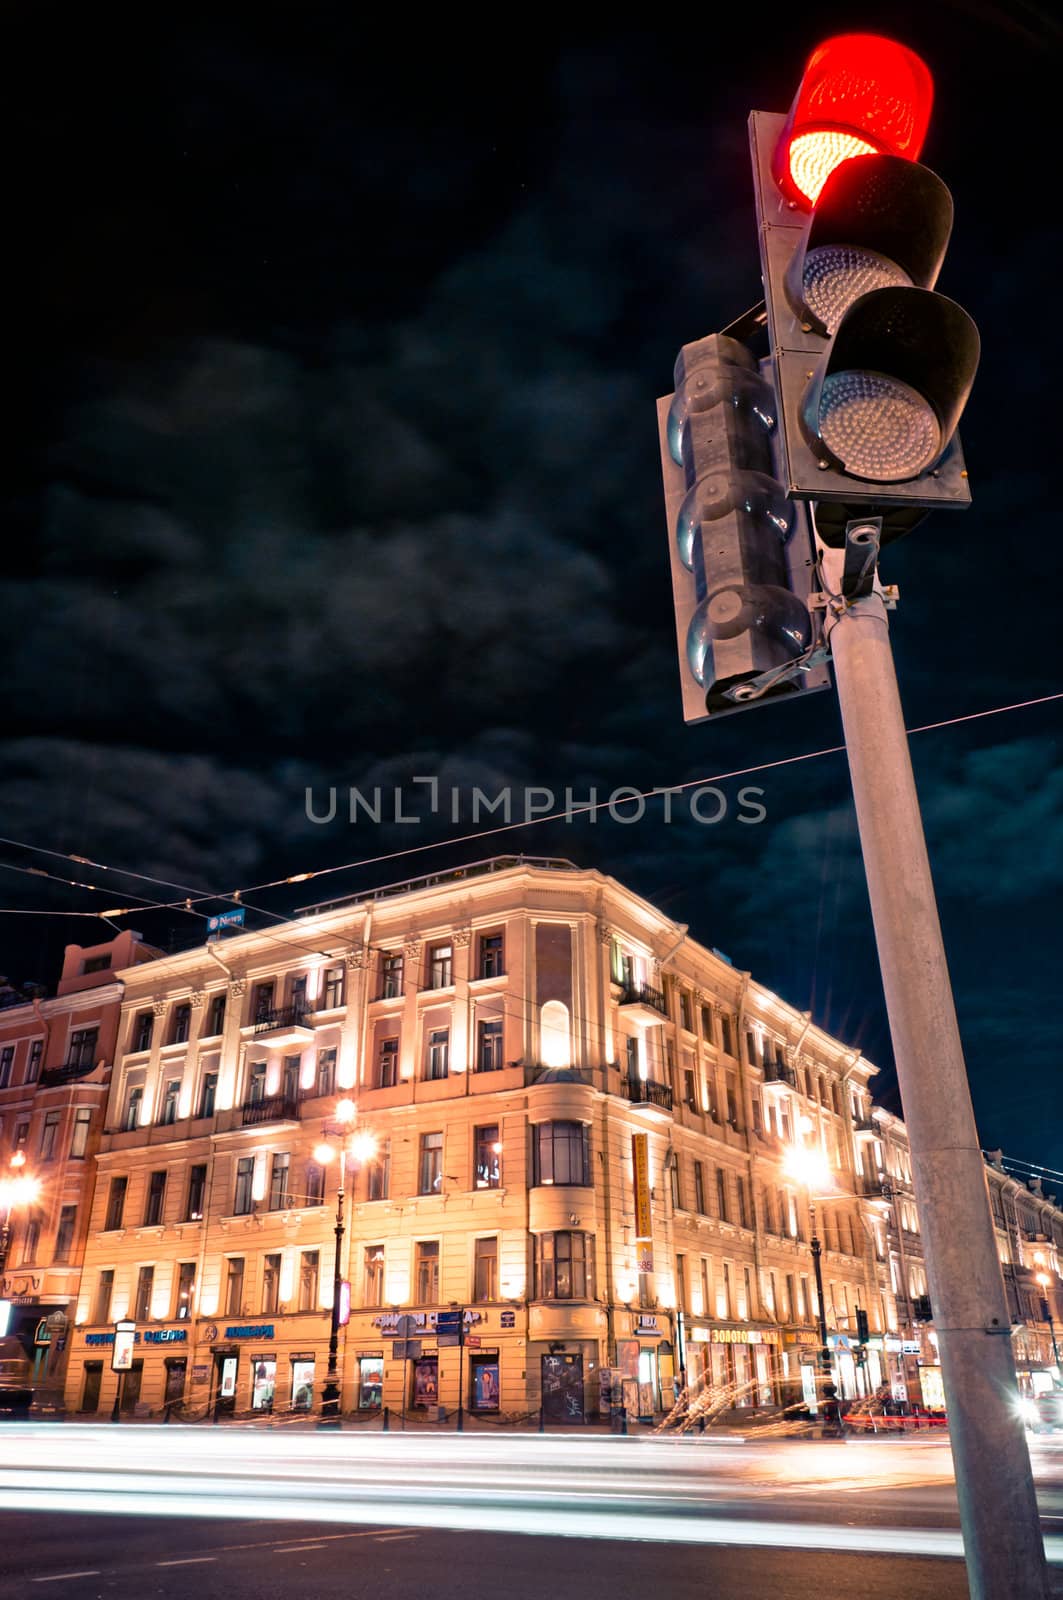 Traffic lights at night by dmitryelagin